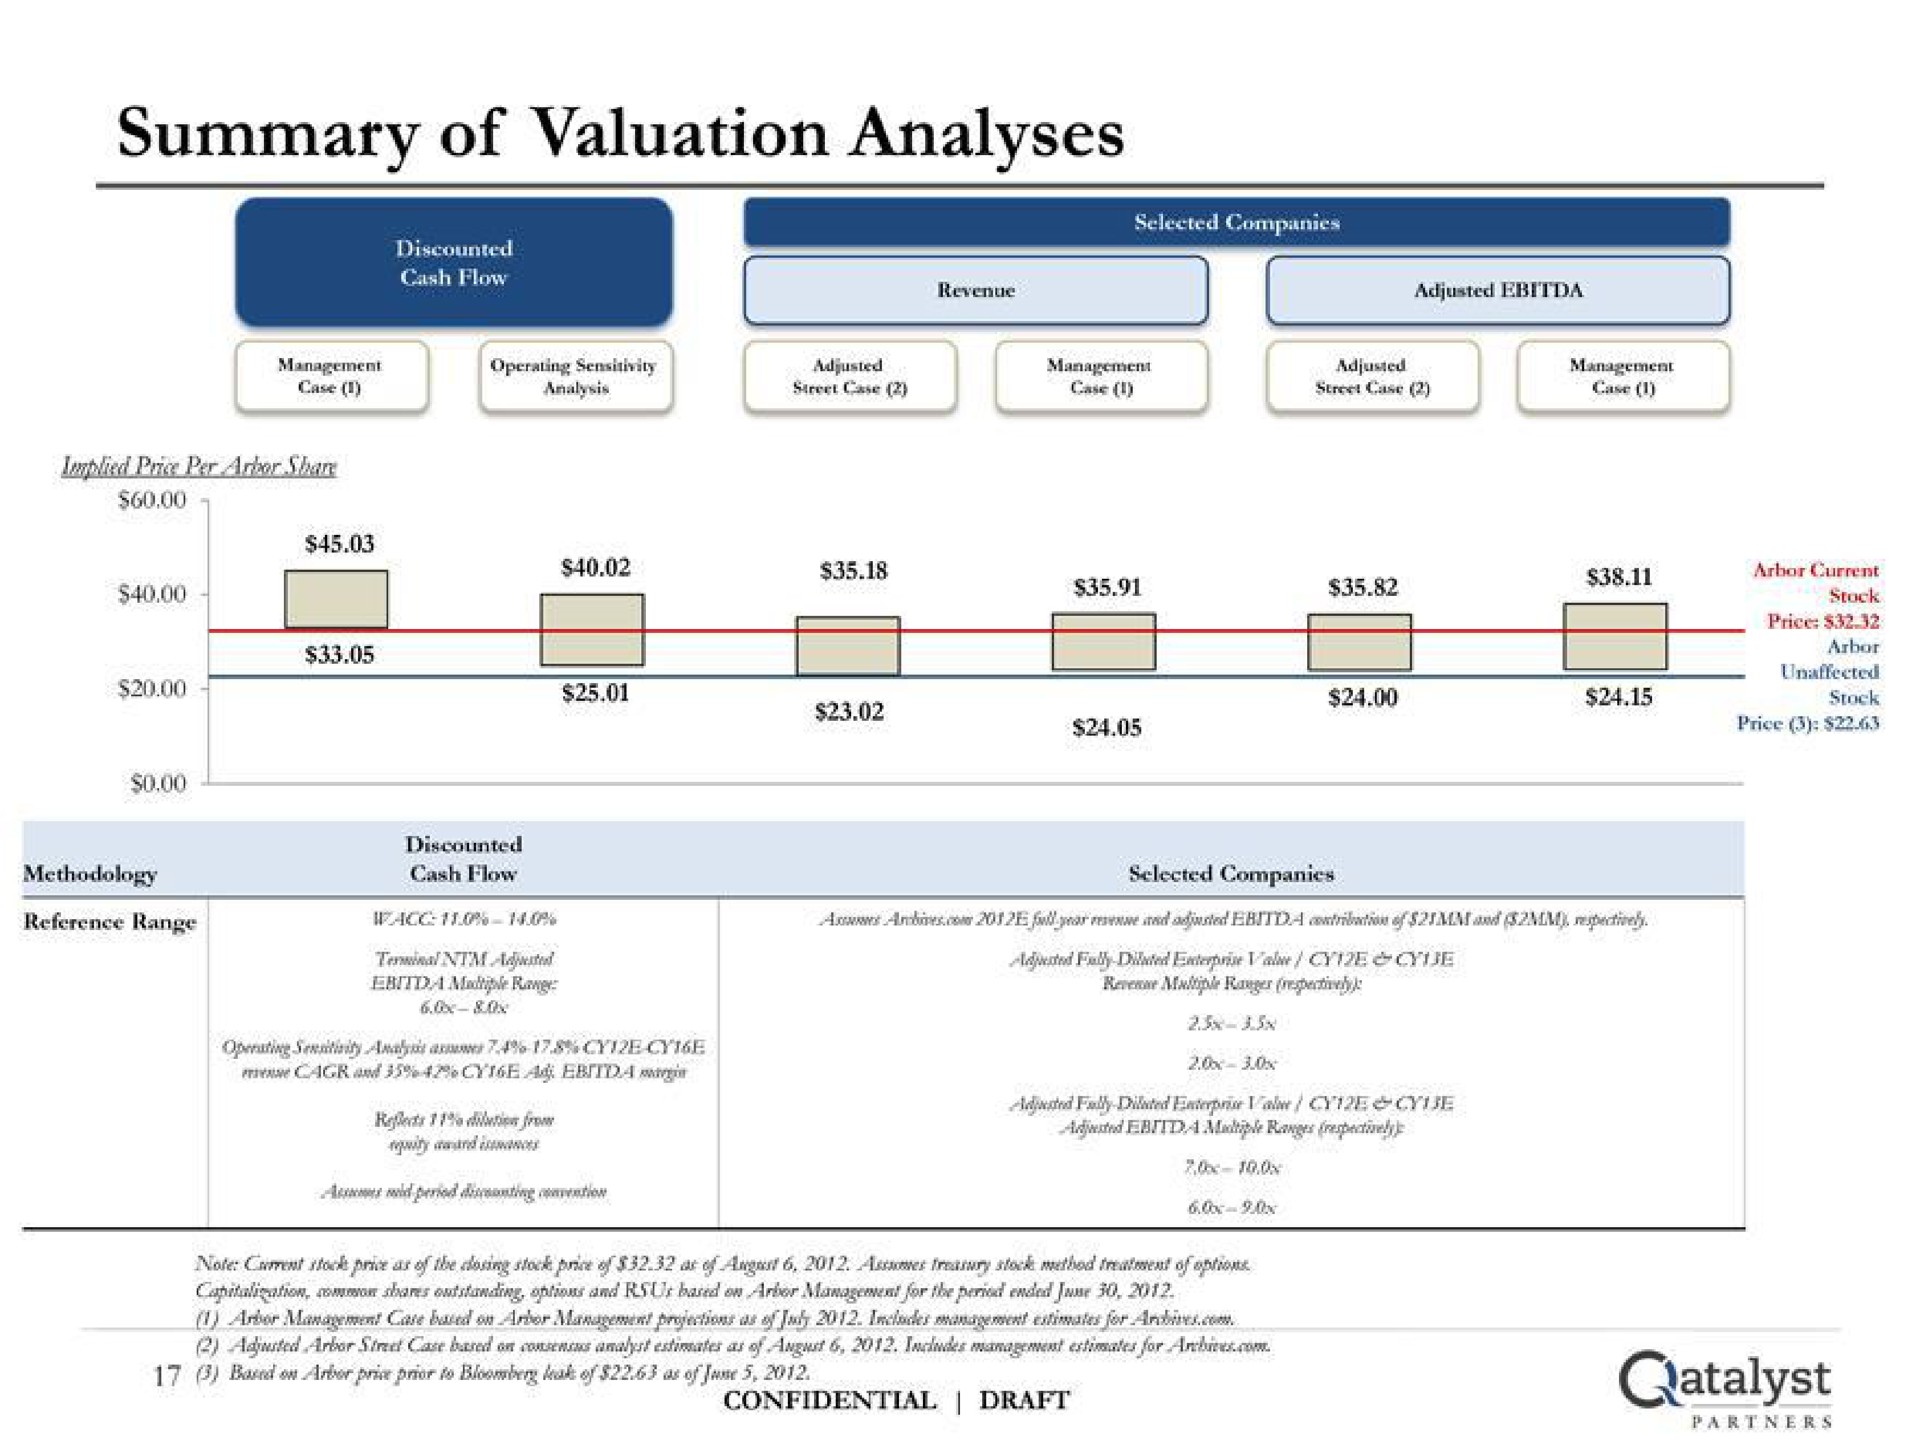 summary of valuation analyses | Qatalyst Partners